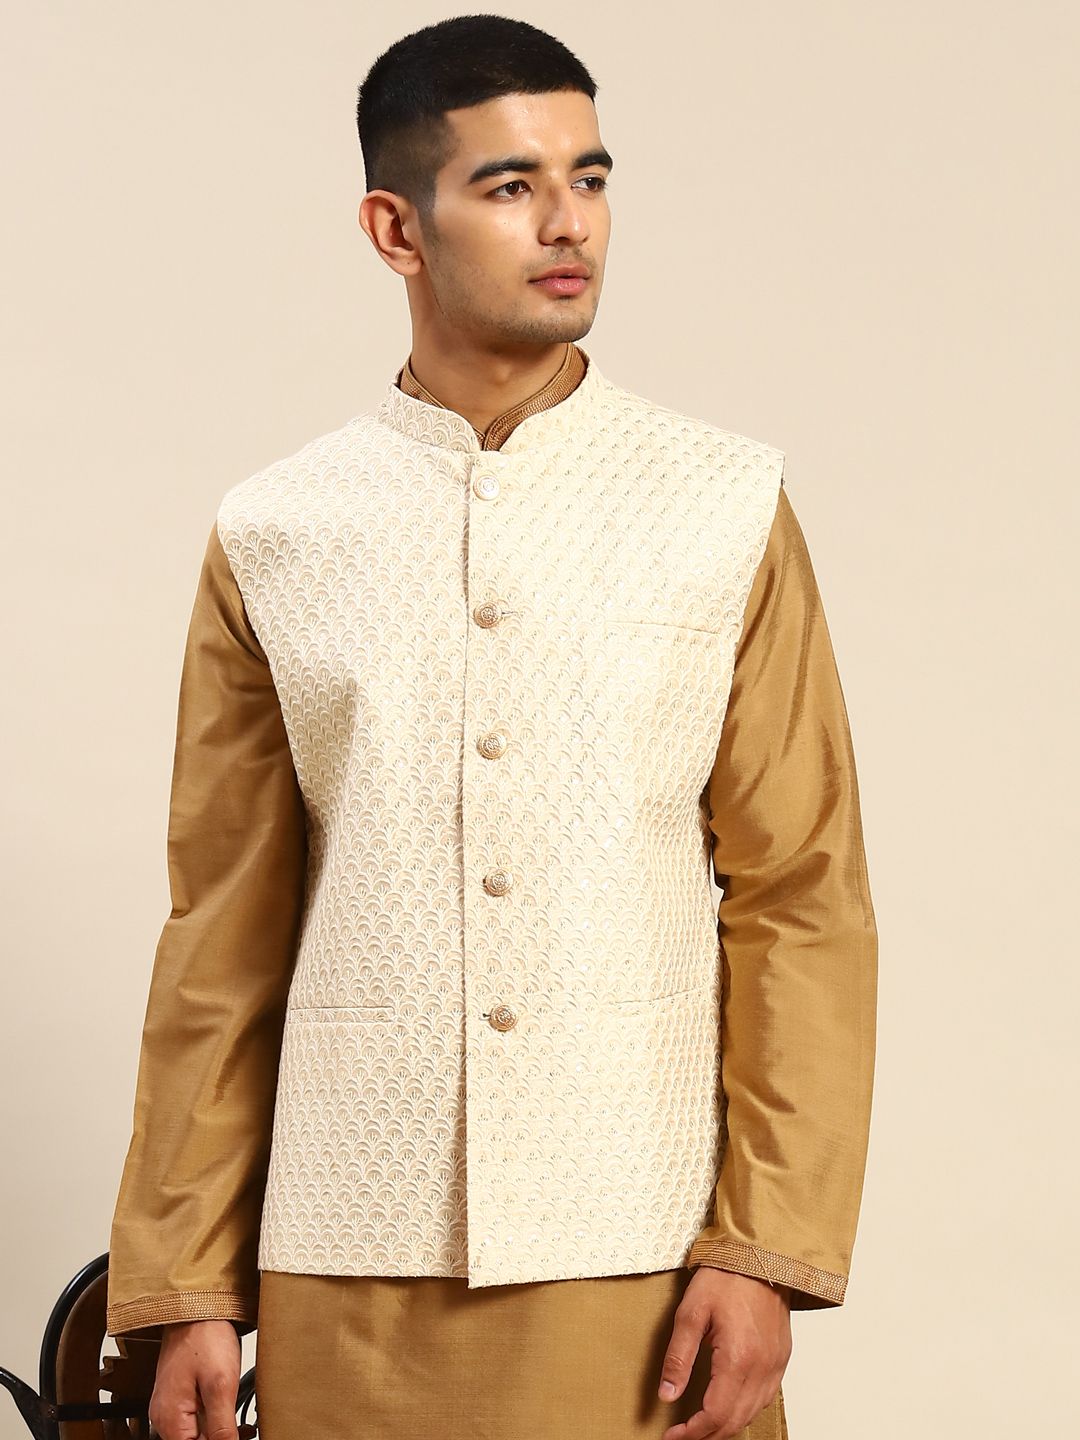 Latest Nehru Jacket Outfit Ideas For Men ⋆ Best Fashion Blog For Men -  TheUnstitchd.com